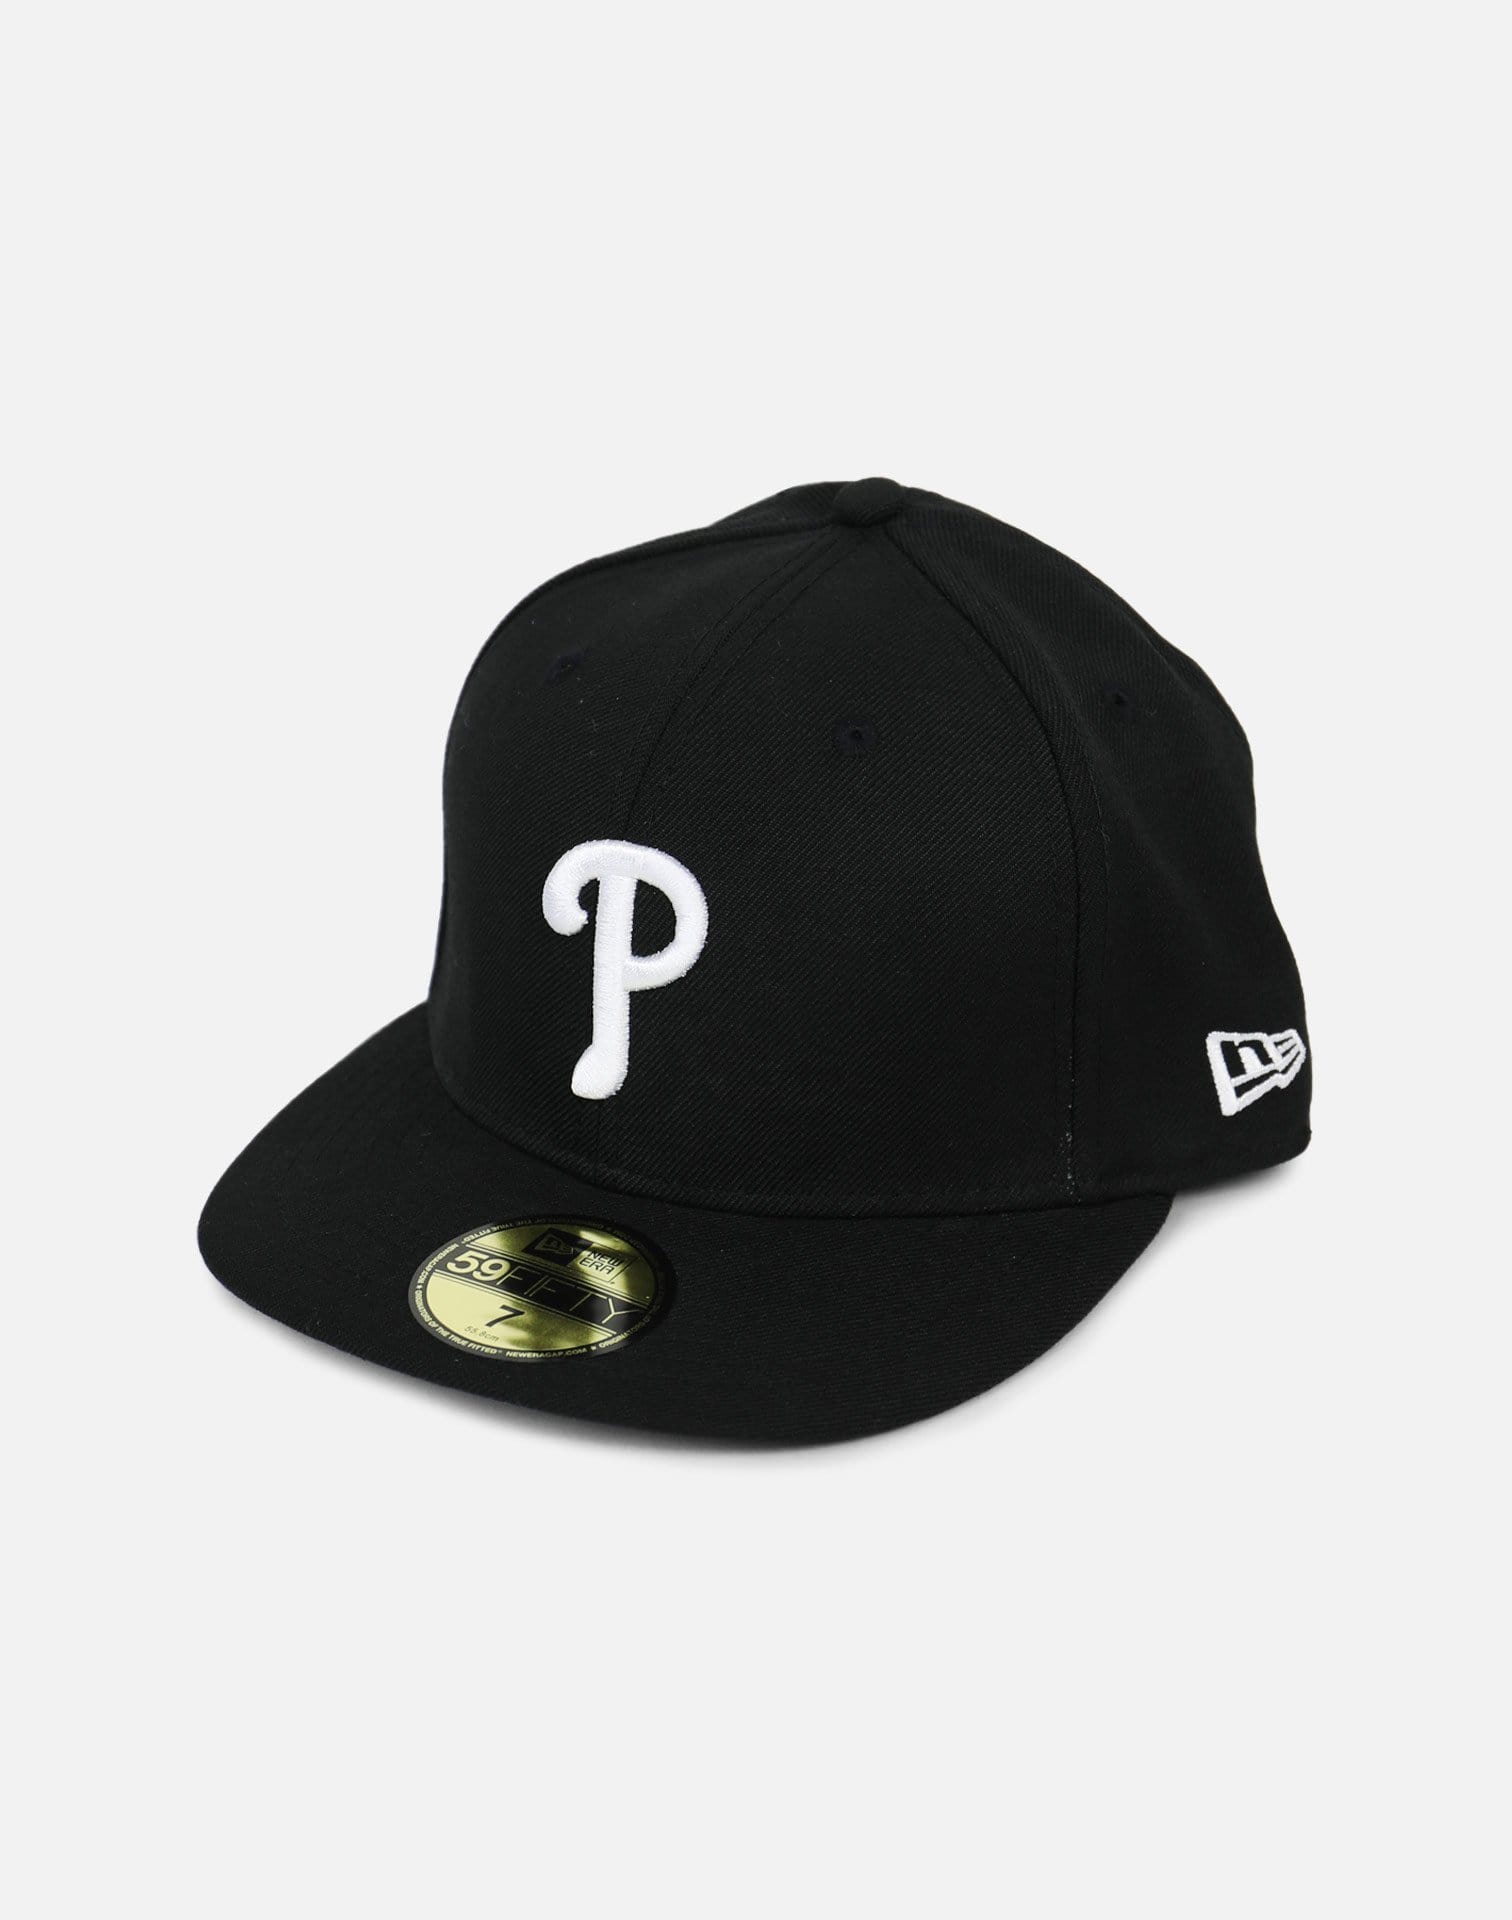 New Era Philadelphia Phillies Black Fitted Hat (Black)